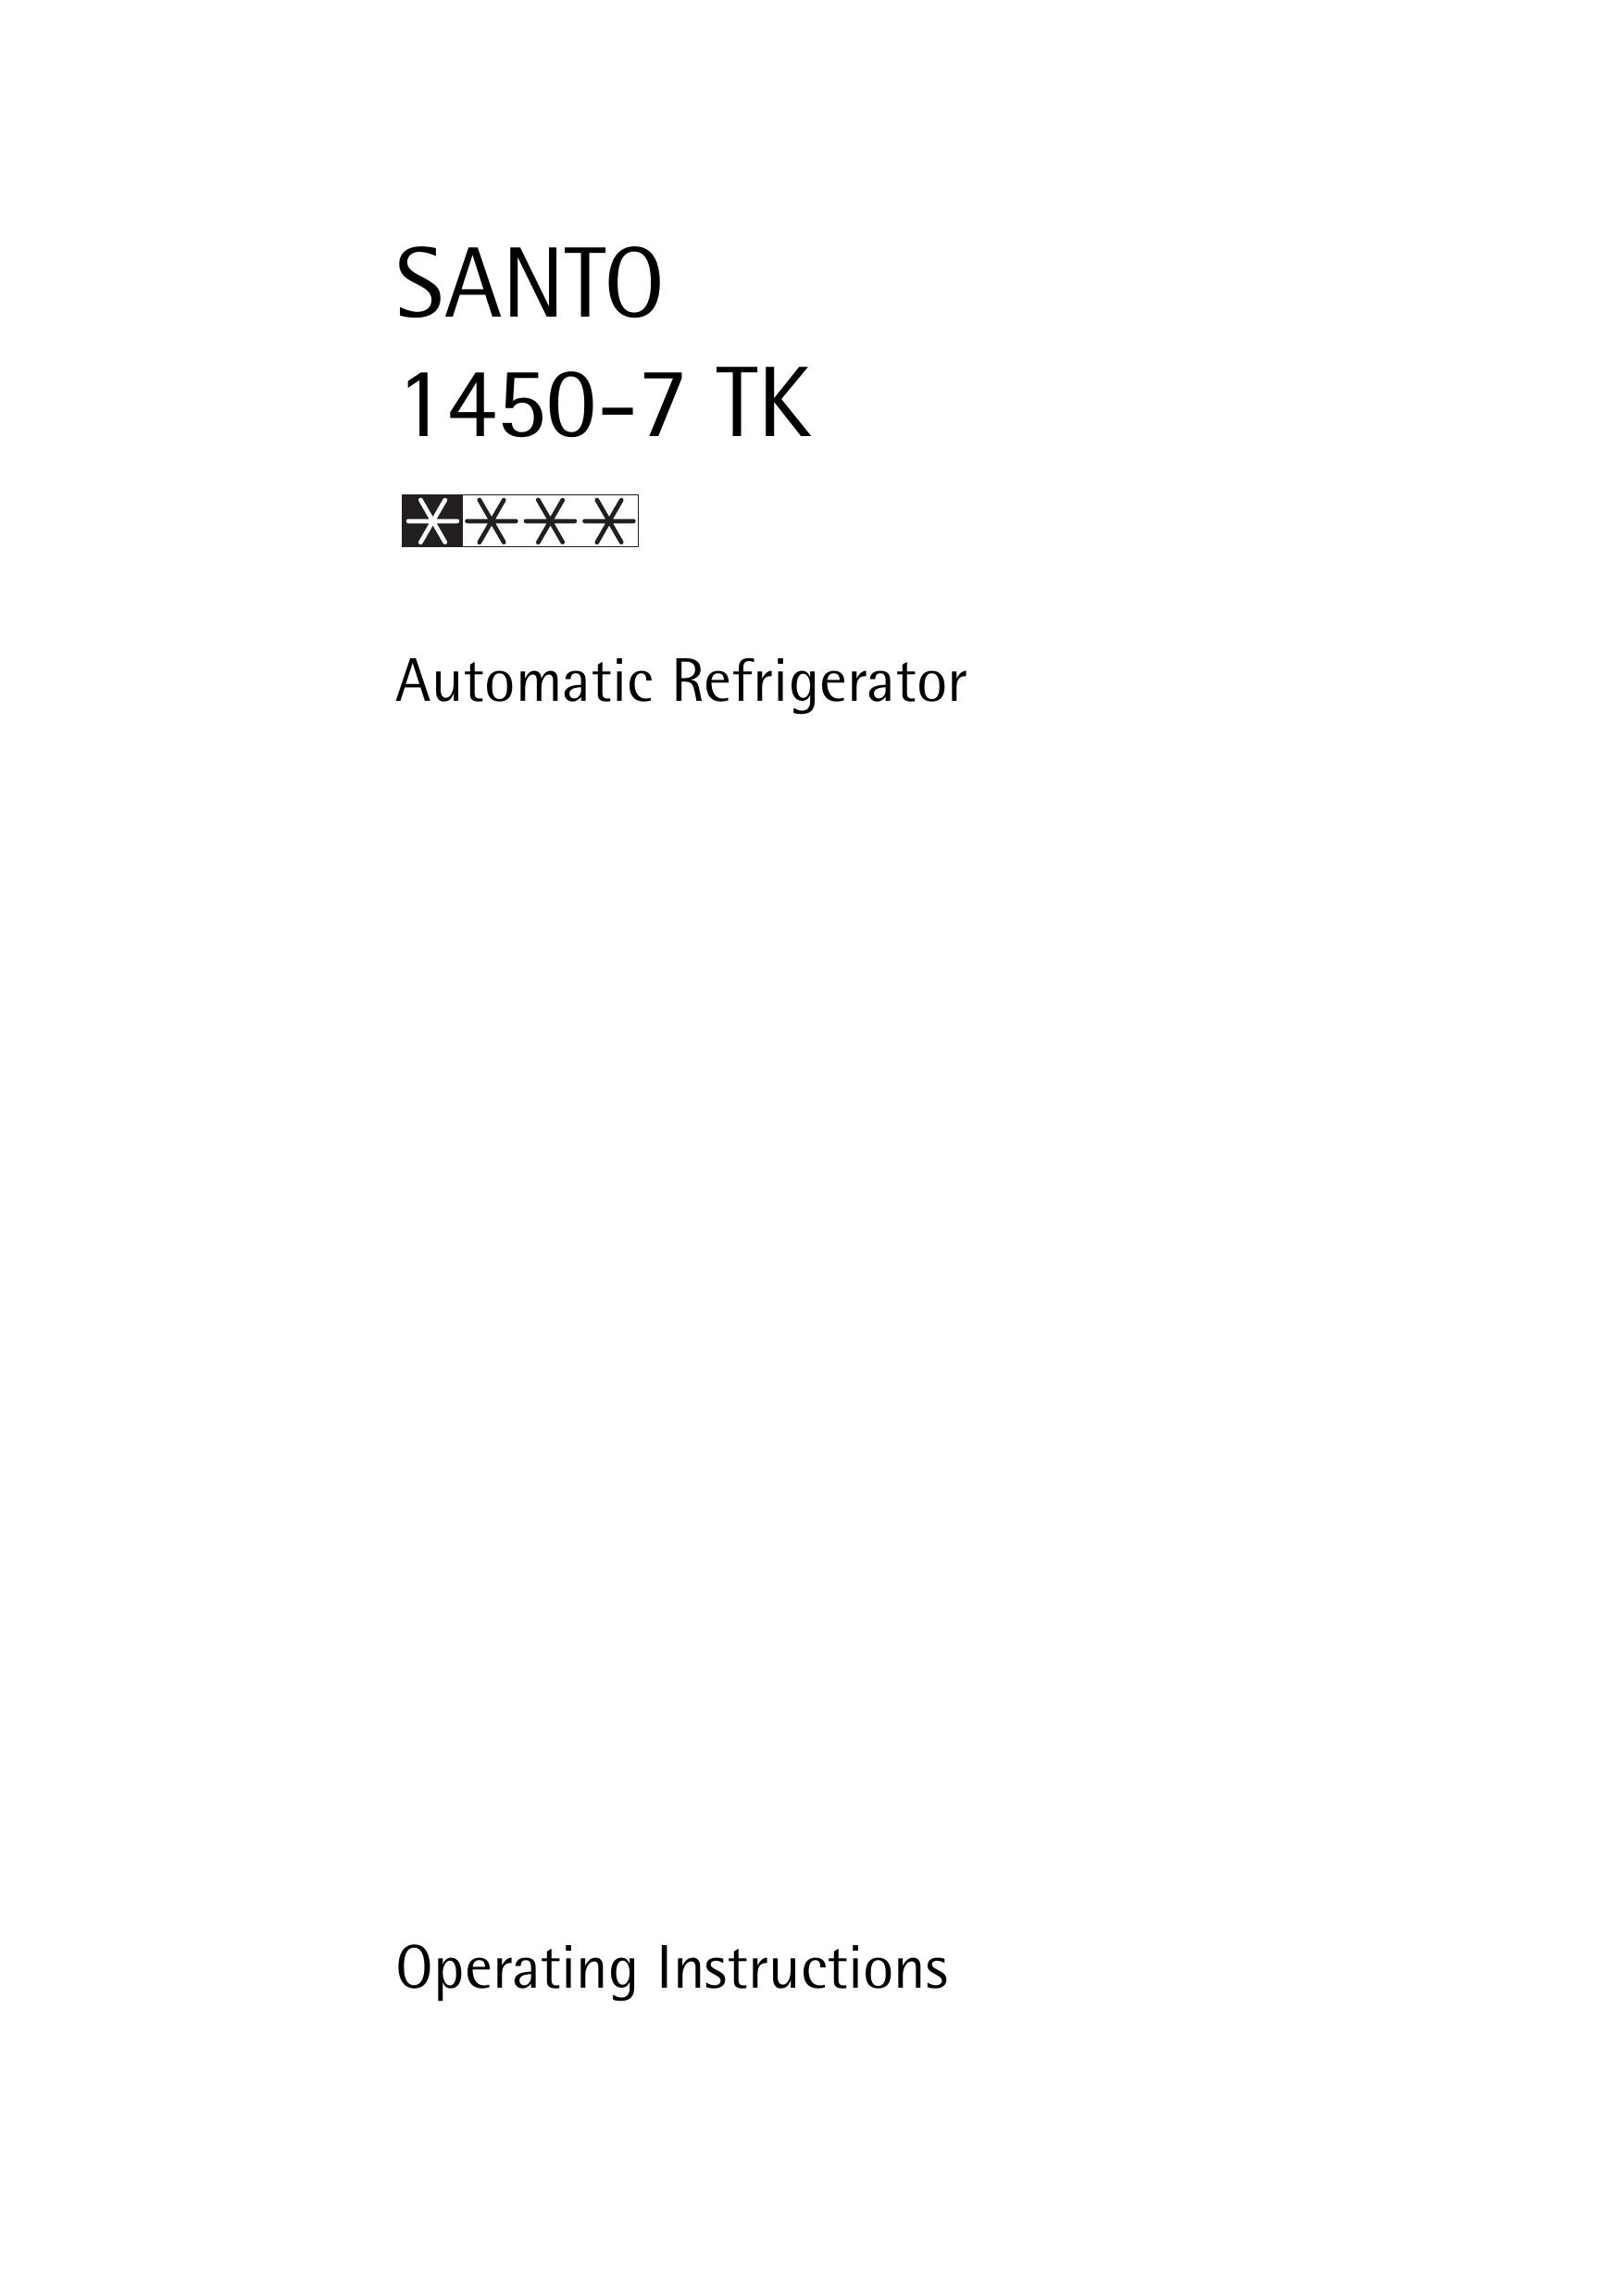 AEG 1450-7 TK Refrigerator User Manual